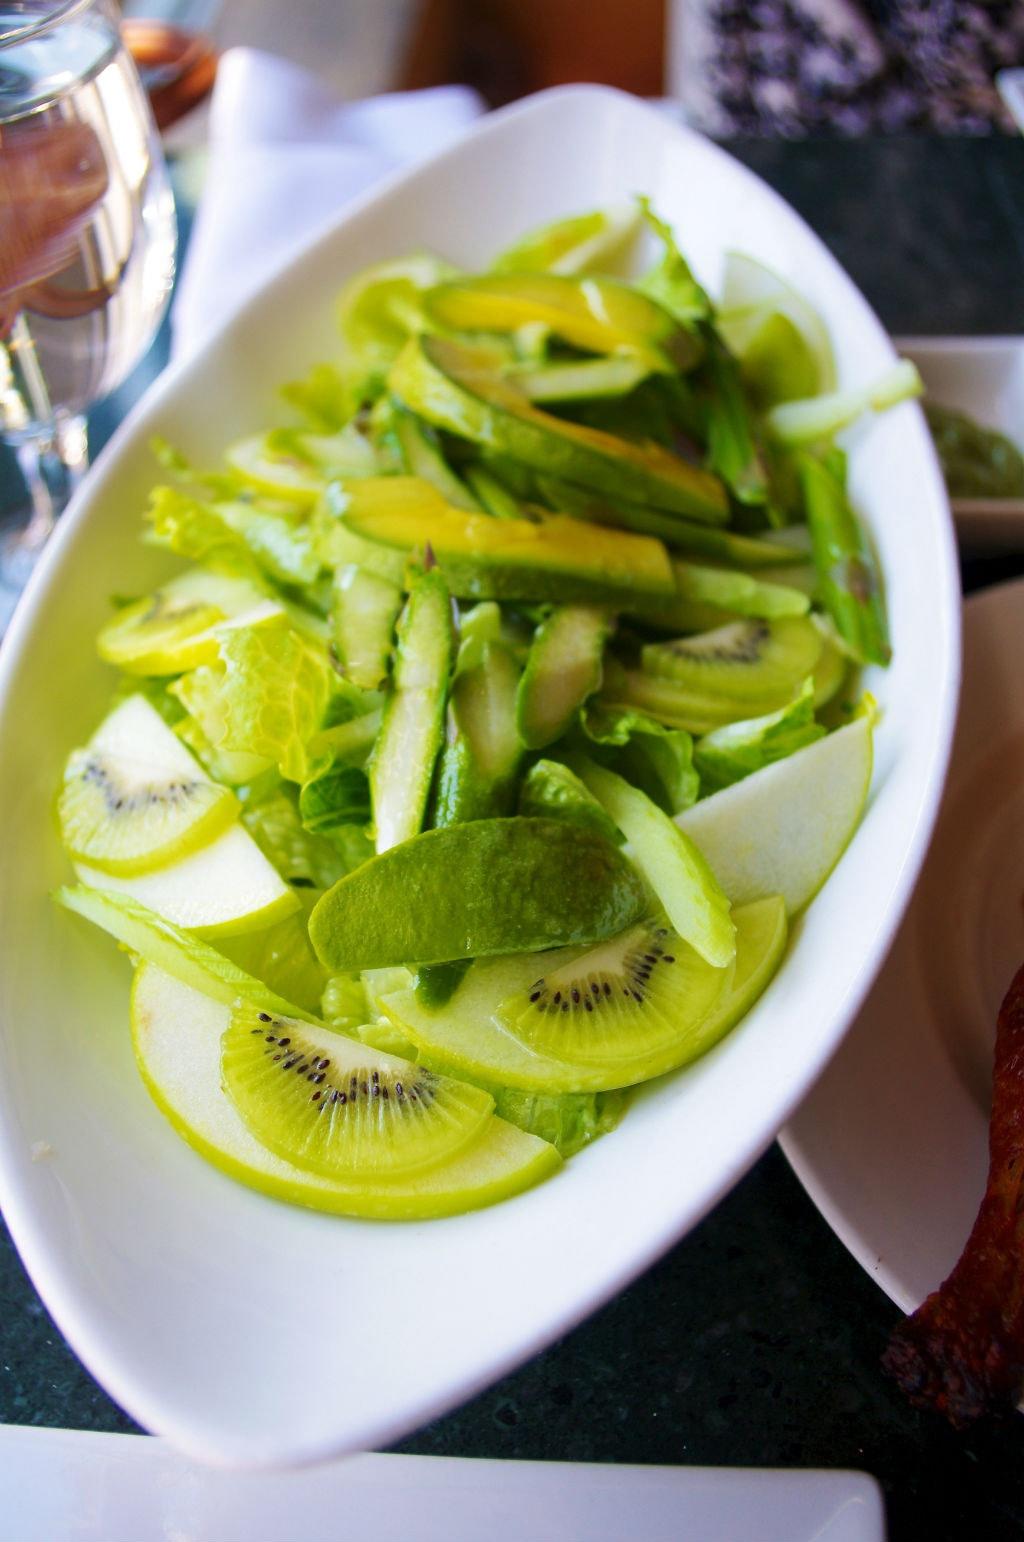 纯绿沙拉 (All green salad)